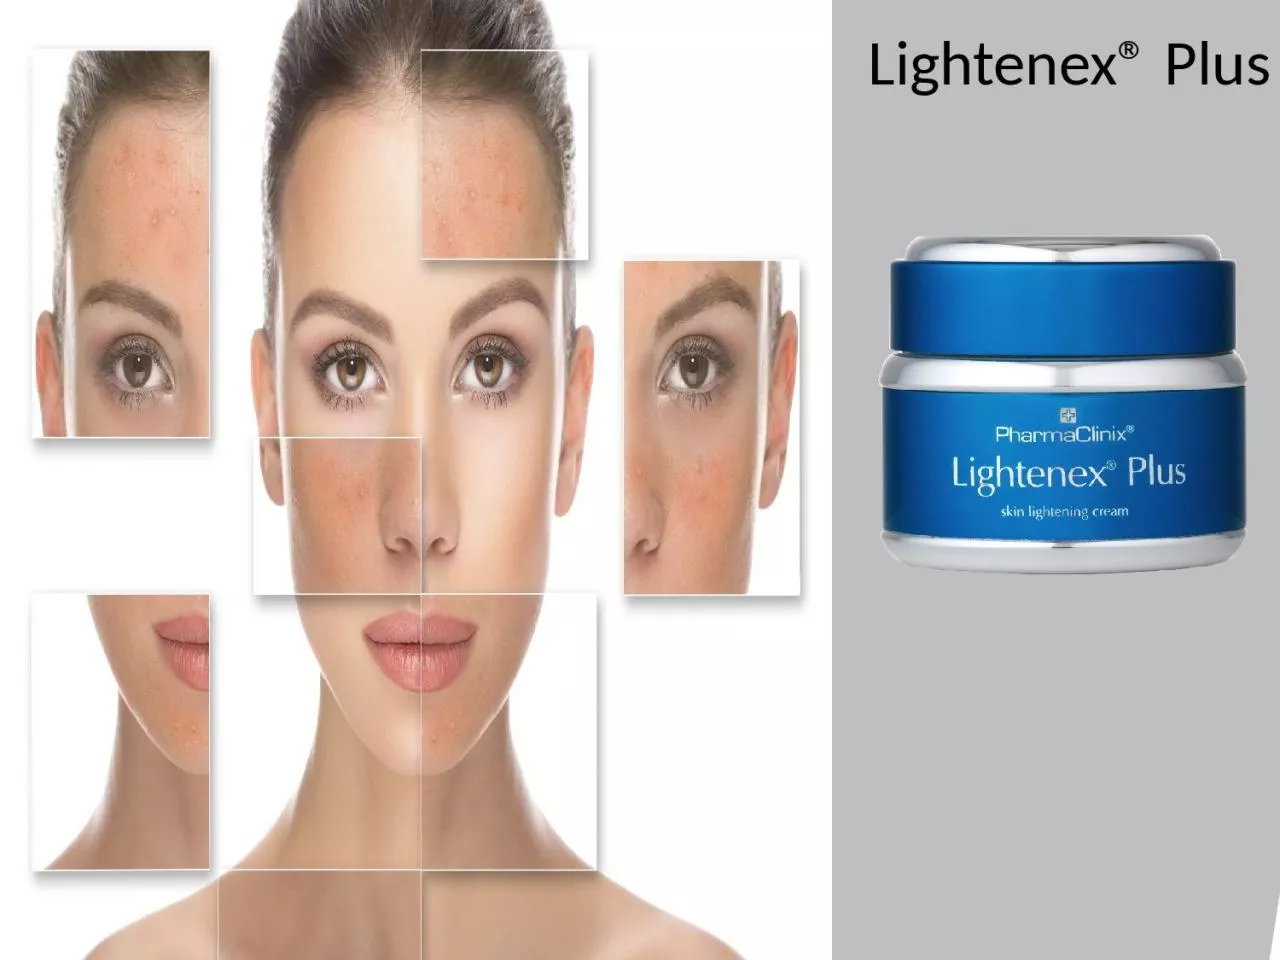 Lightenex ® Plus ACTIVE INGREDIENTS